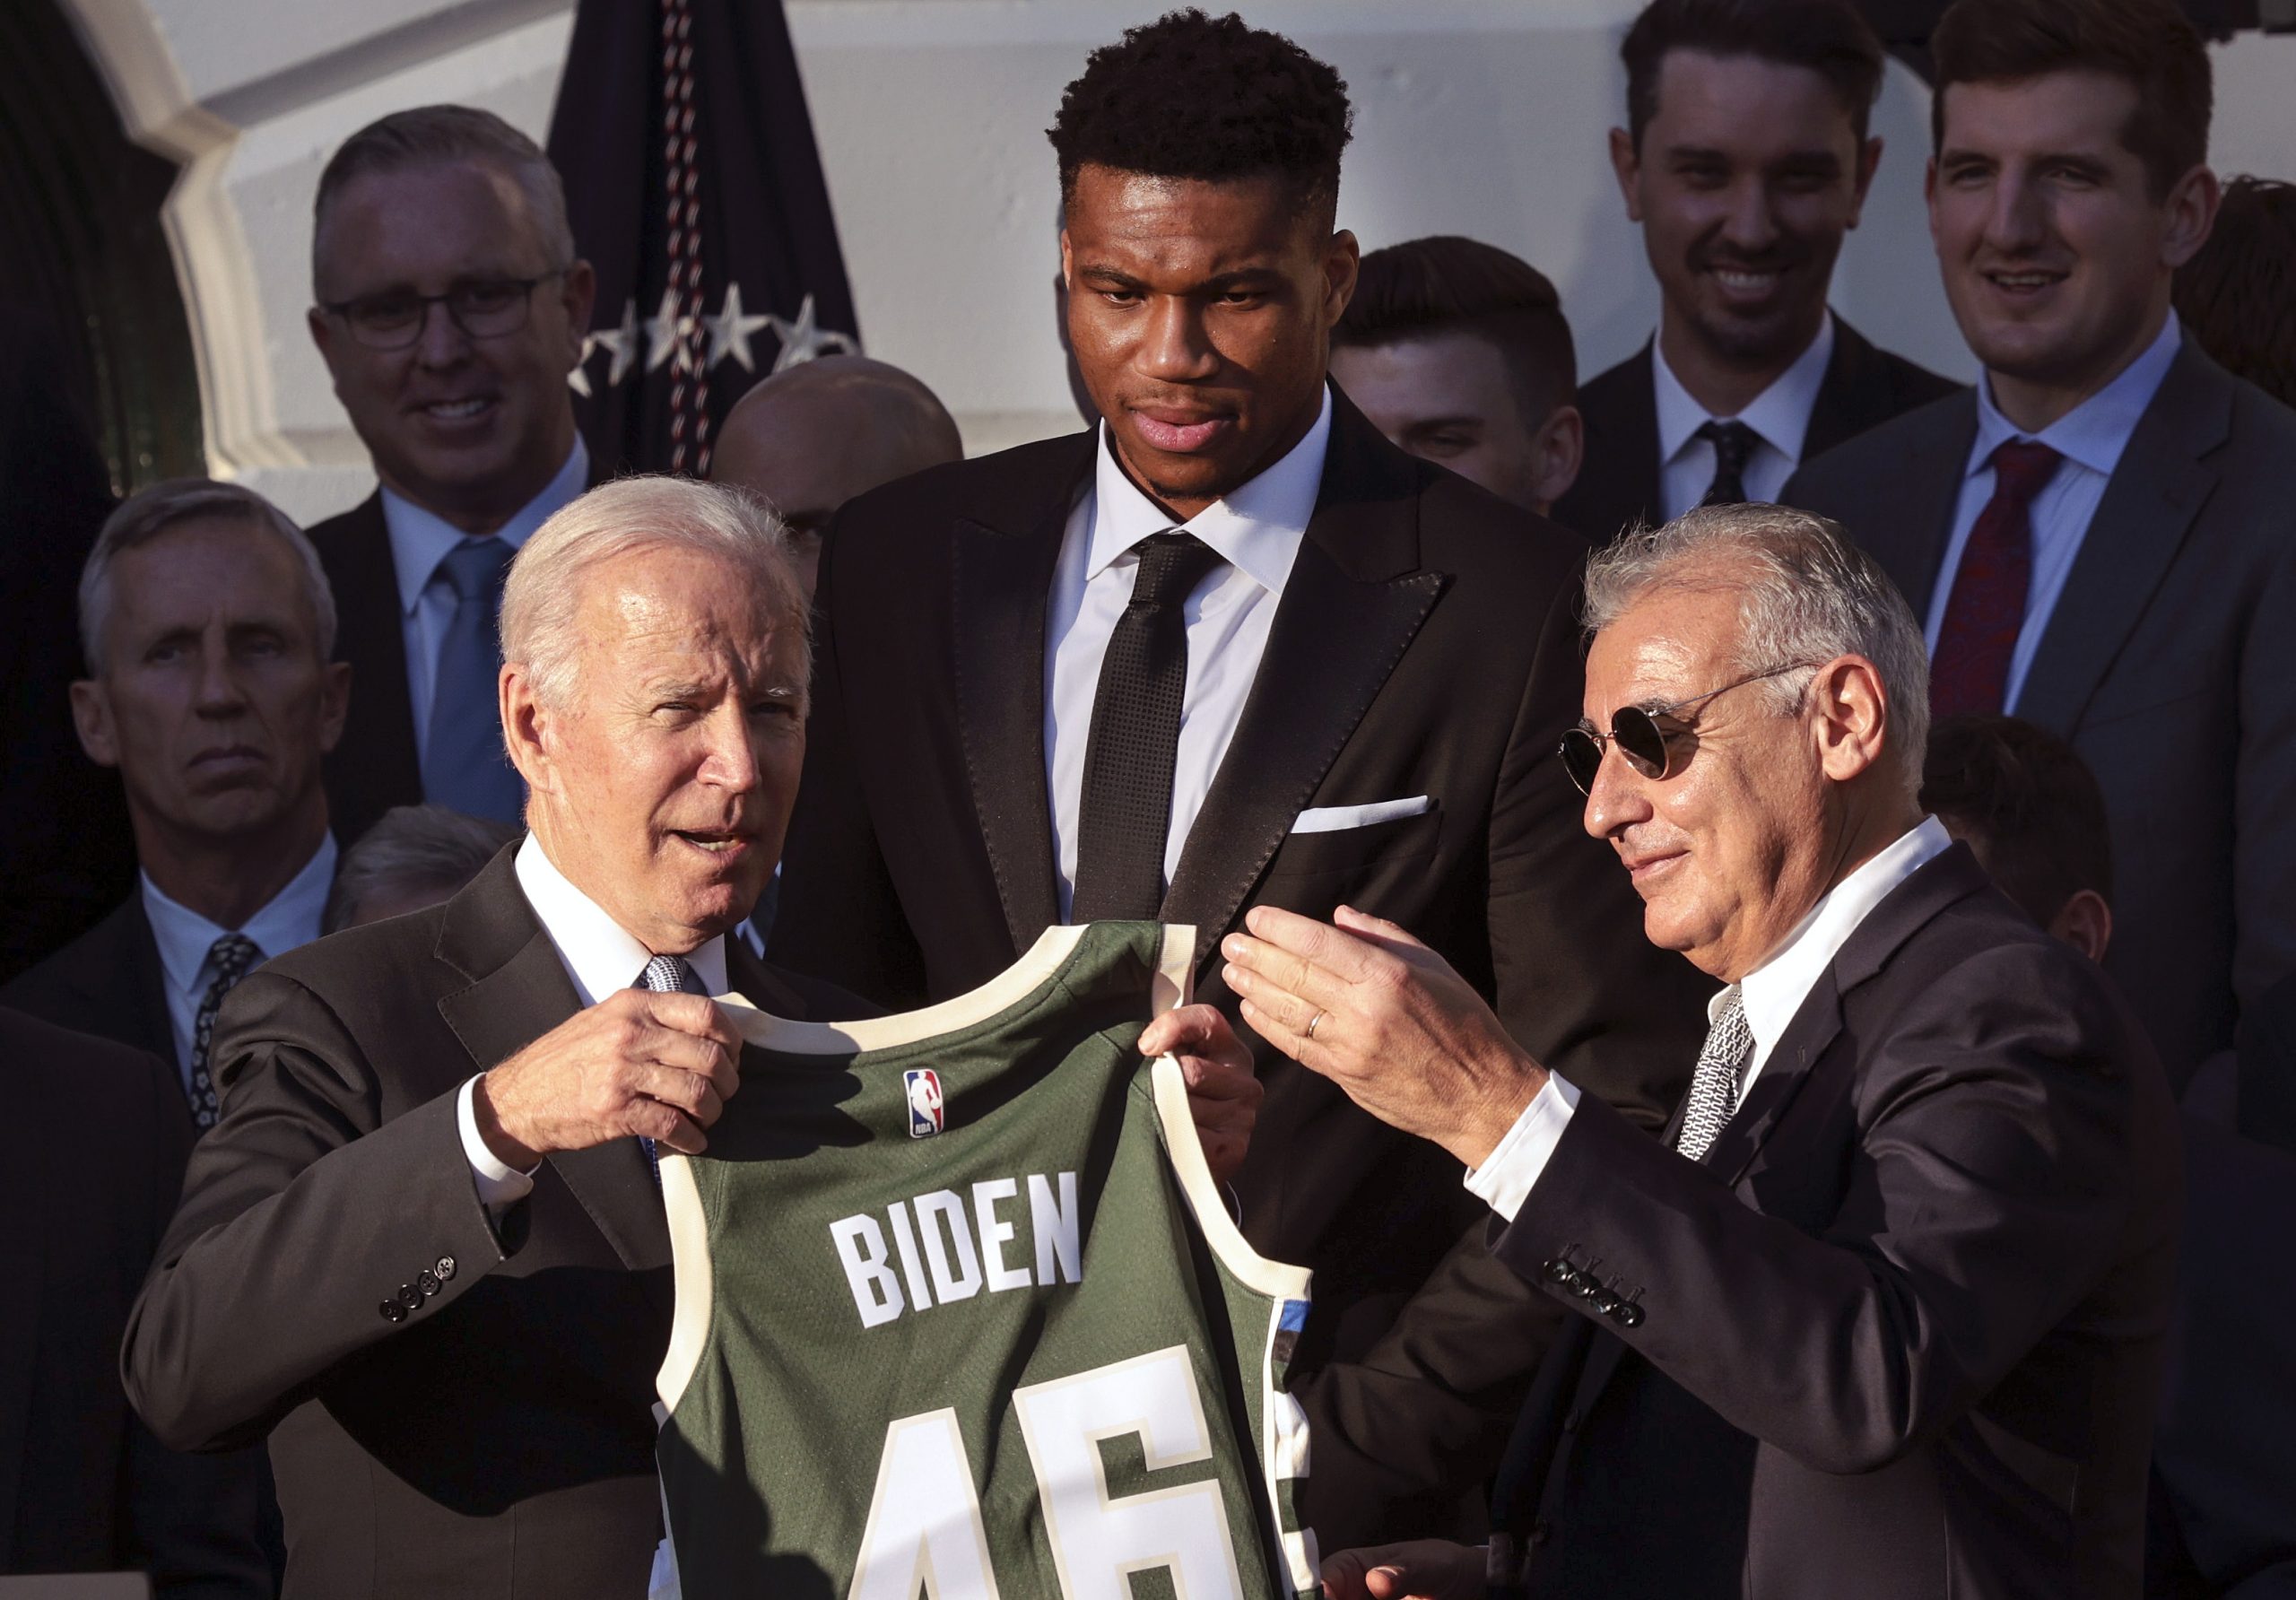 U.S. President Joe Biden receives a jersey from Milwaukee Bucks owner Marc Lasry (R) as Giannis Antetokounmpo watches.